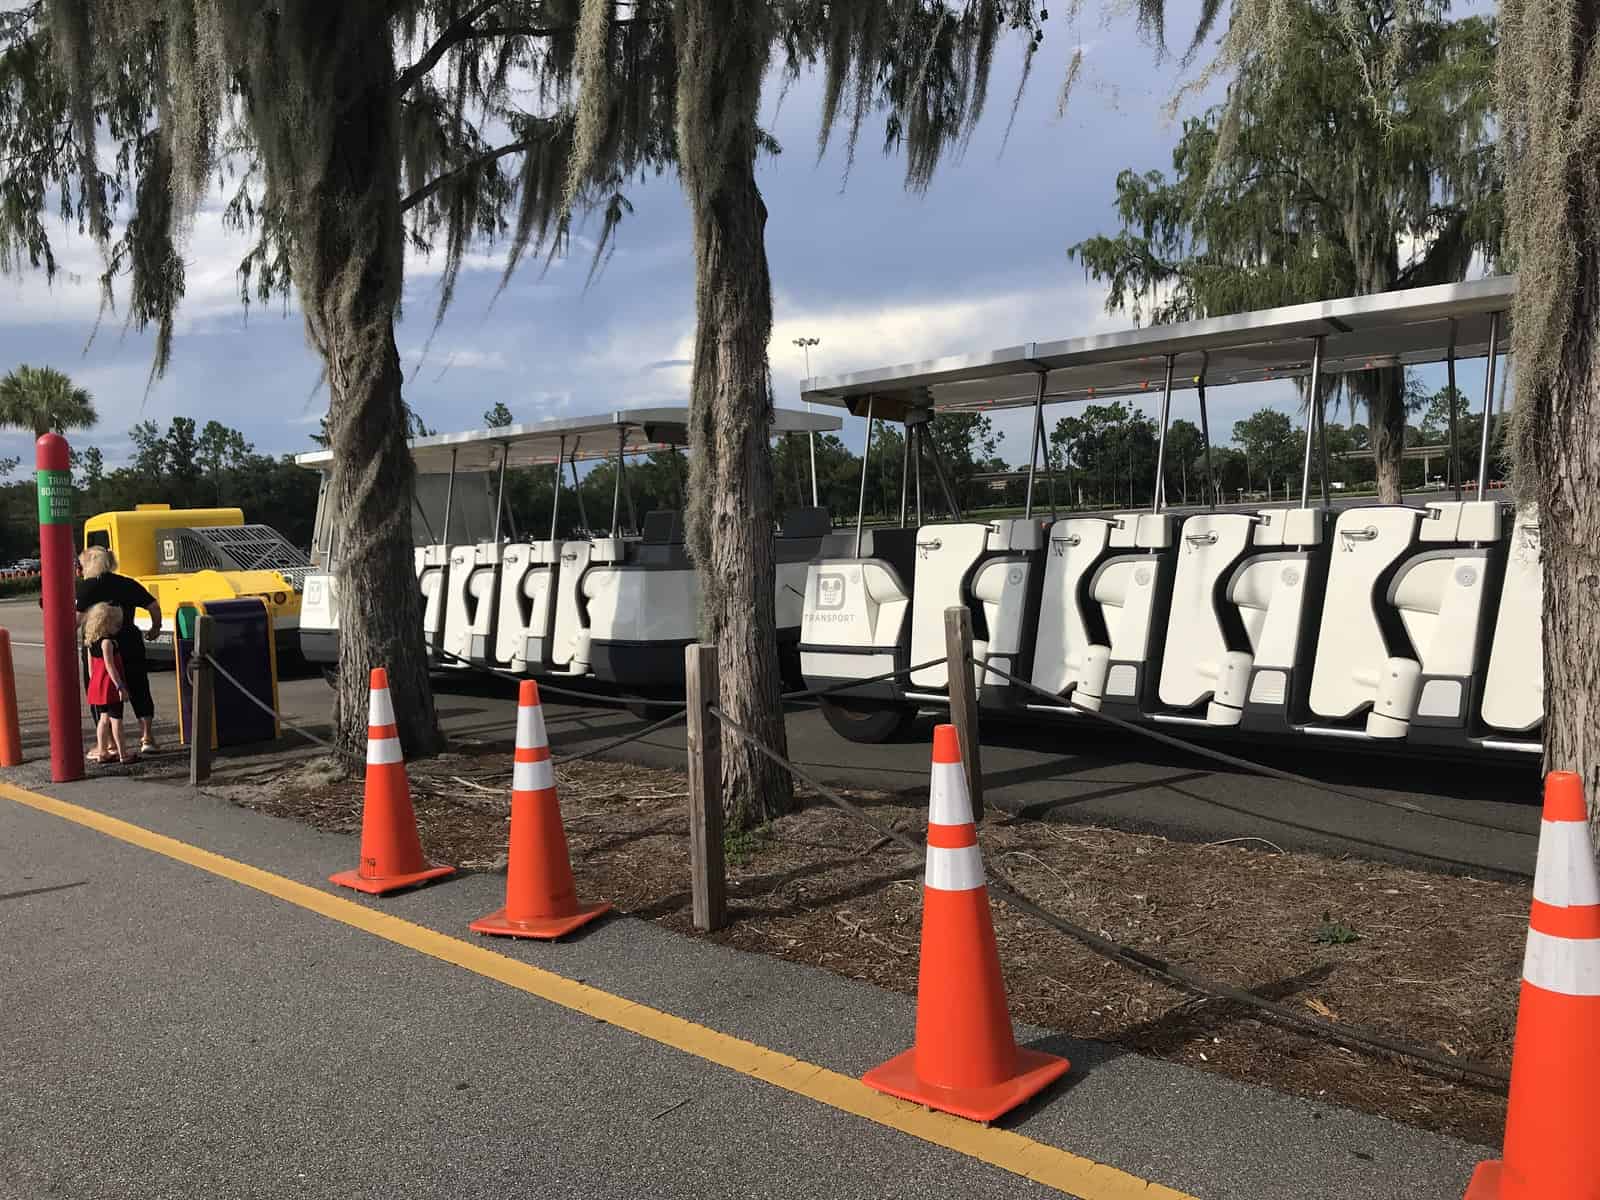 Parking Trams Returning To Disney World, Starting With Magic Kingdom